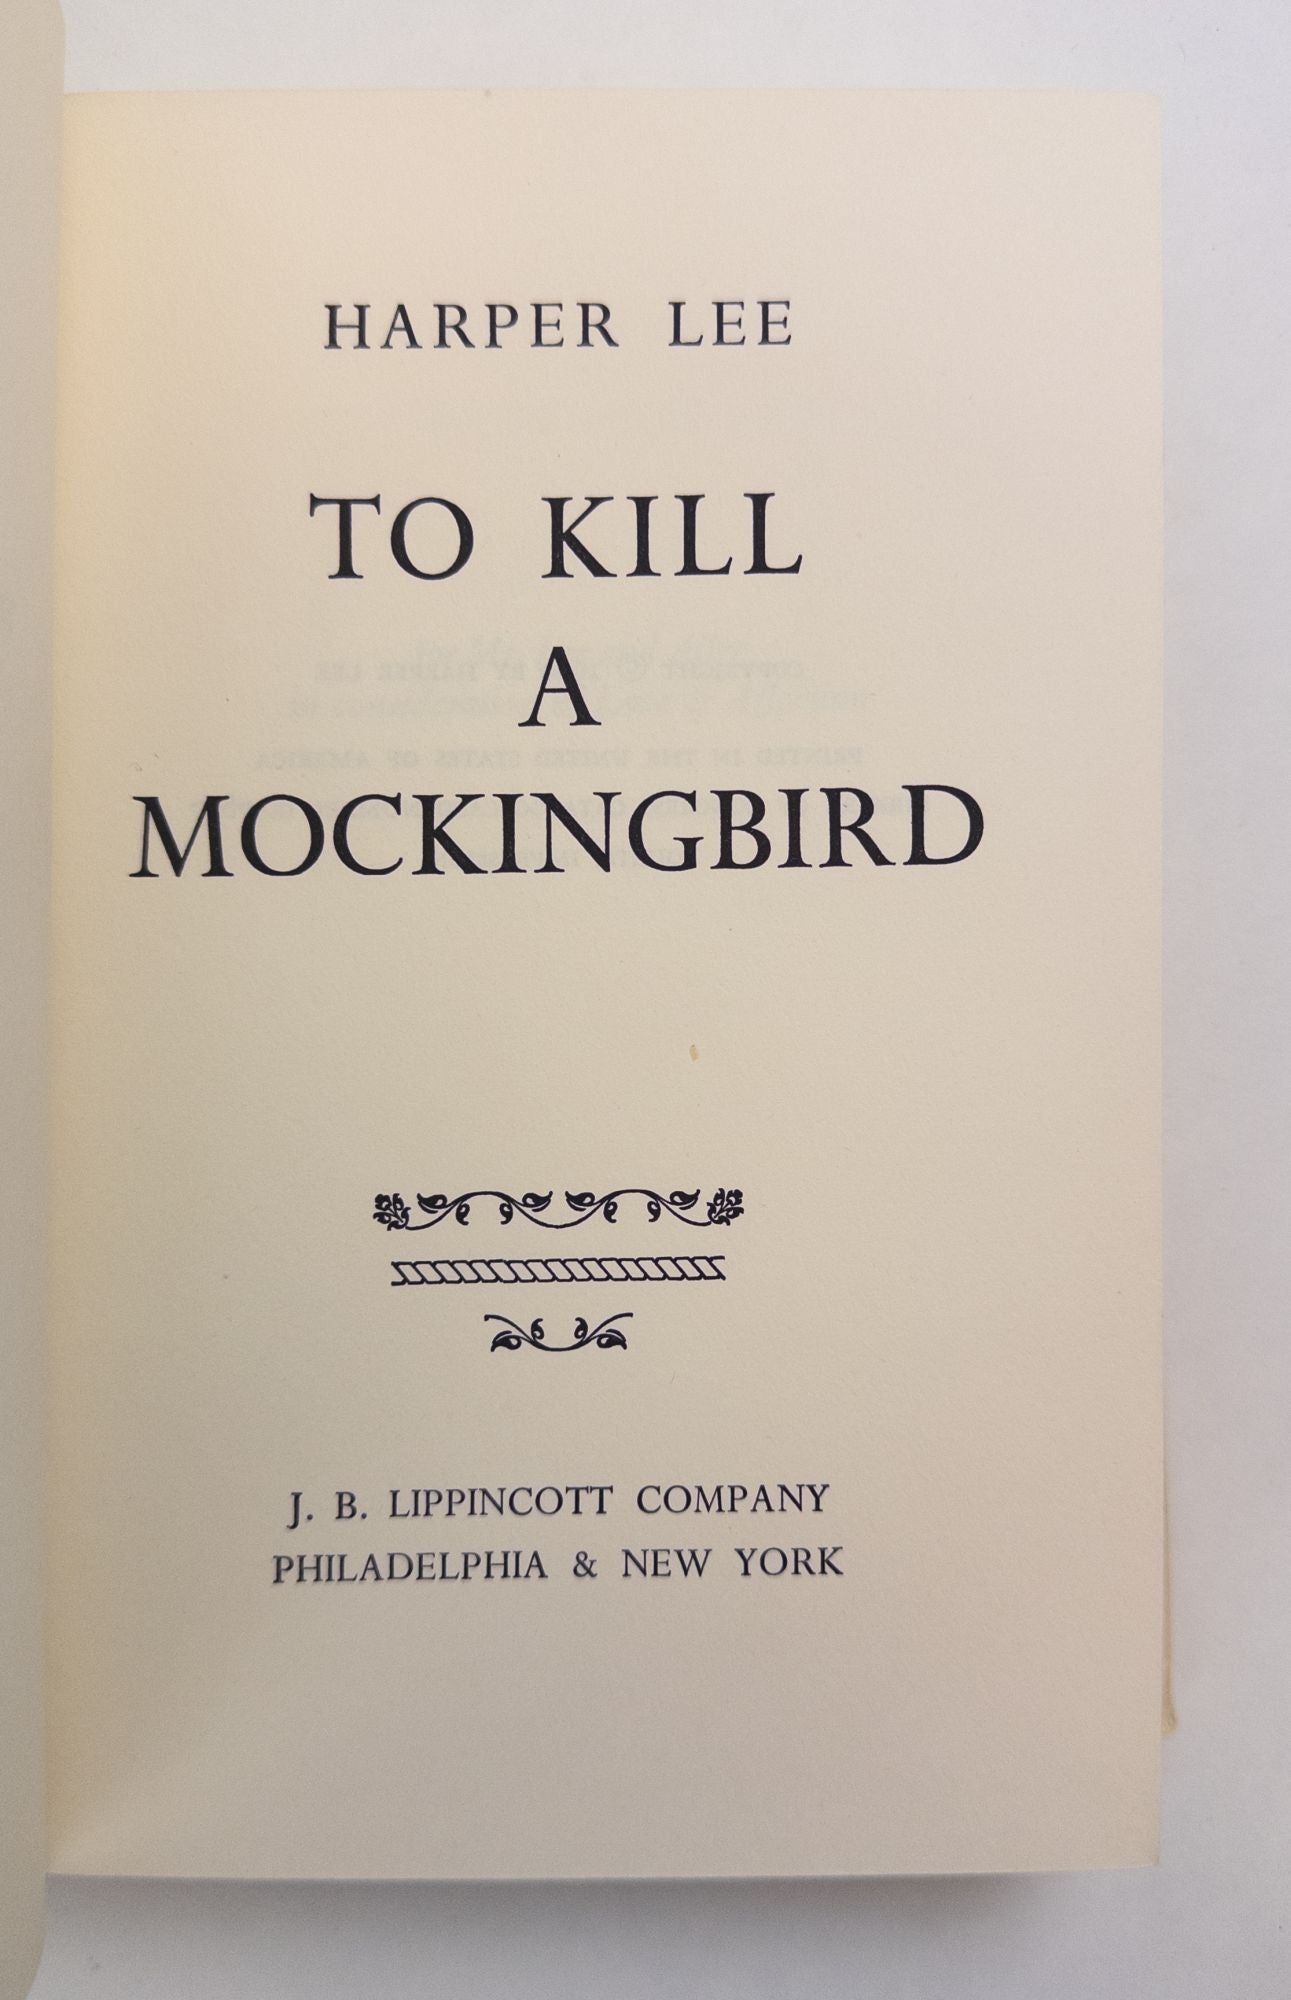 Product Image for TO KILL A MOCKINGBIRD